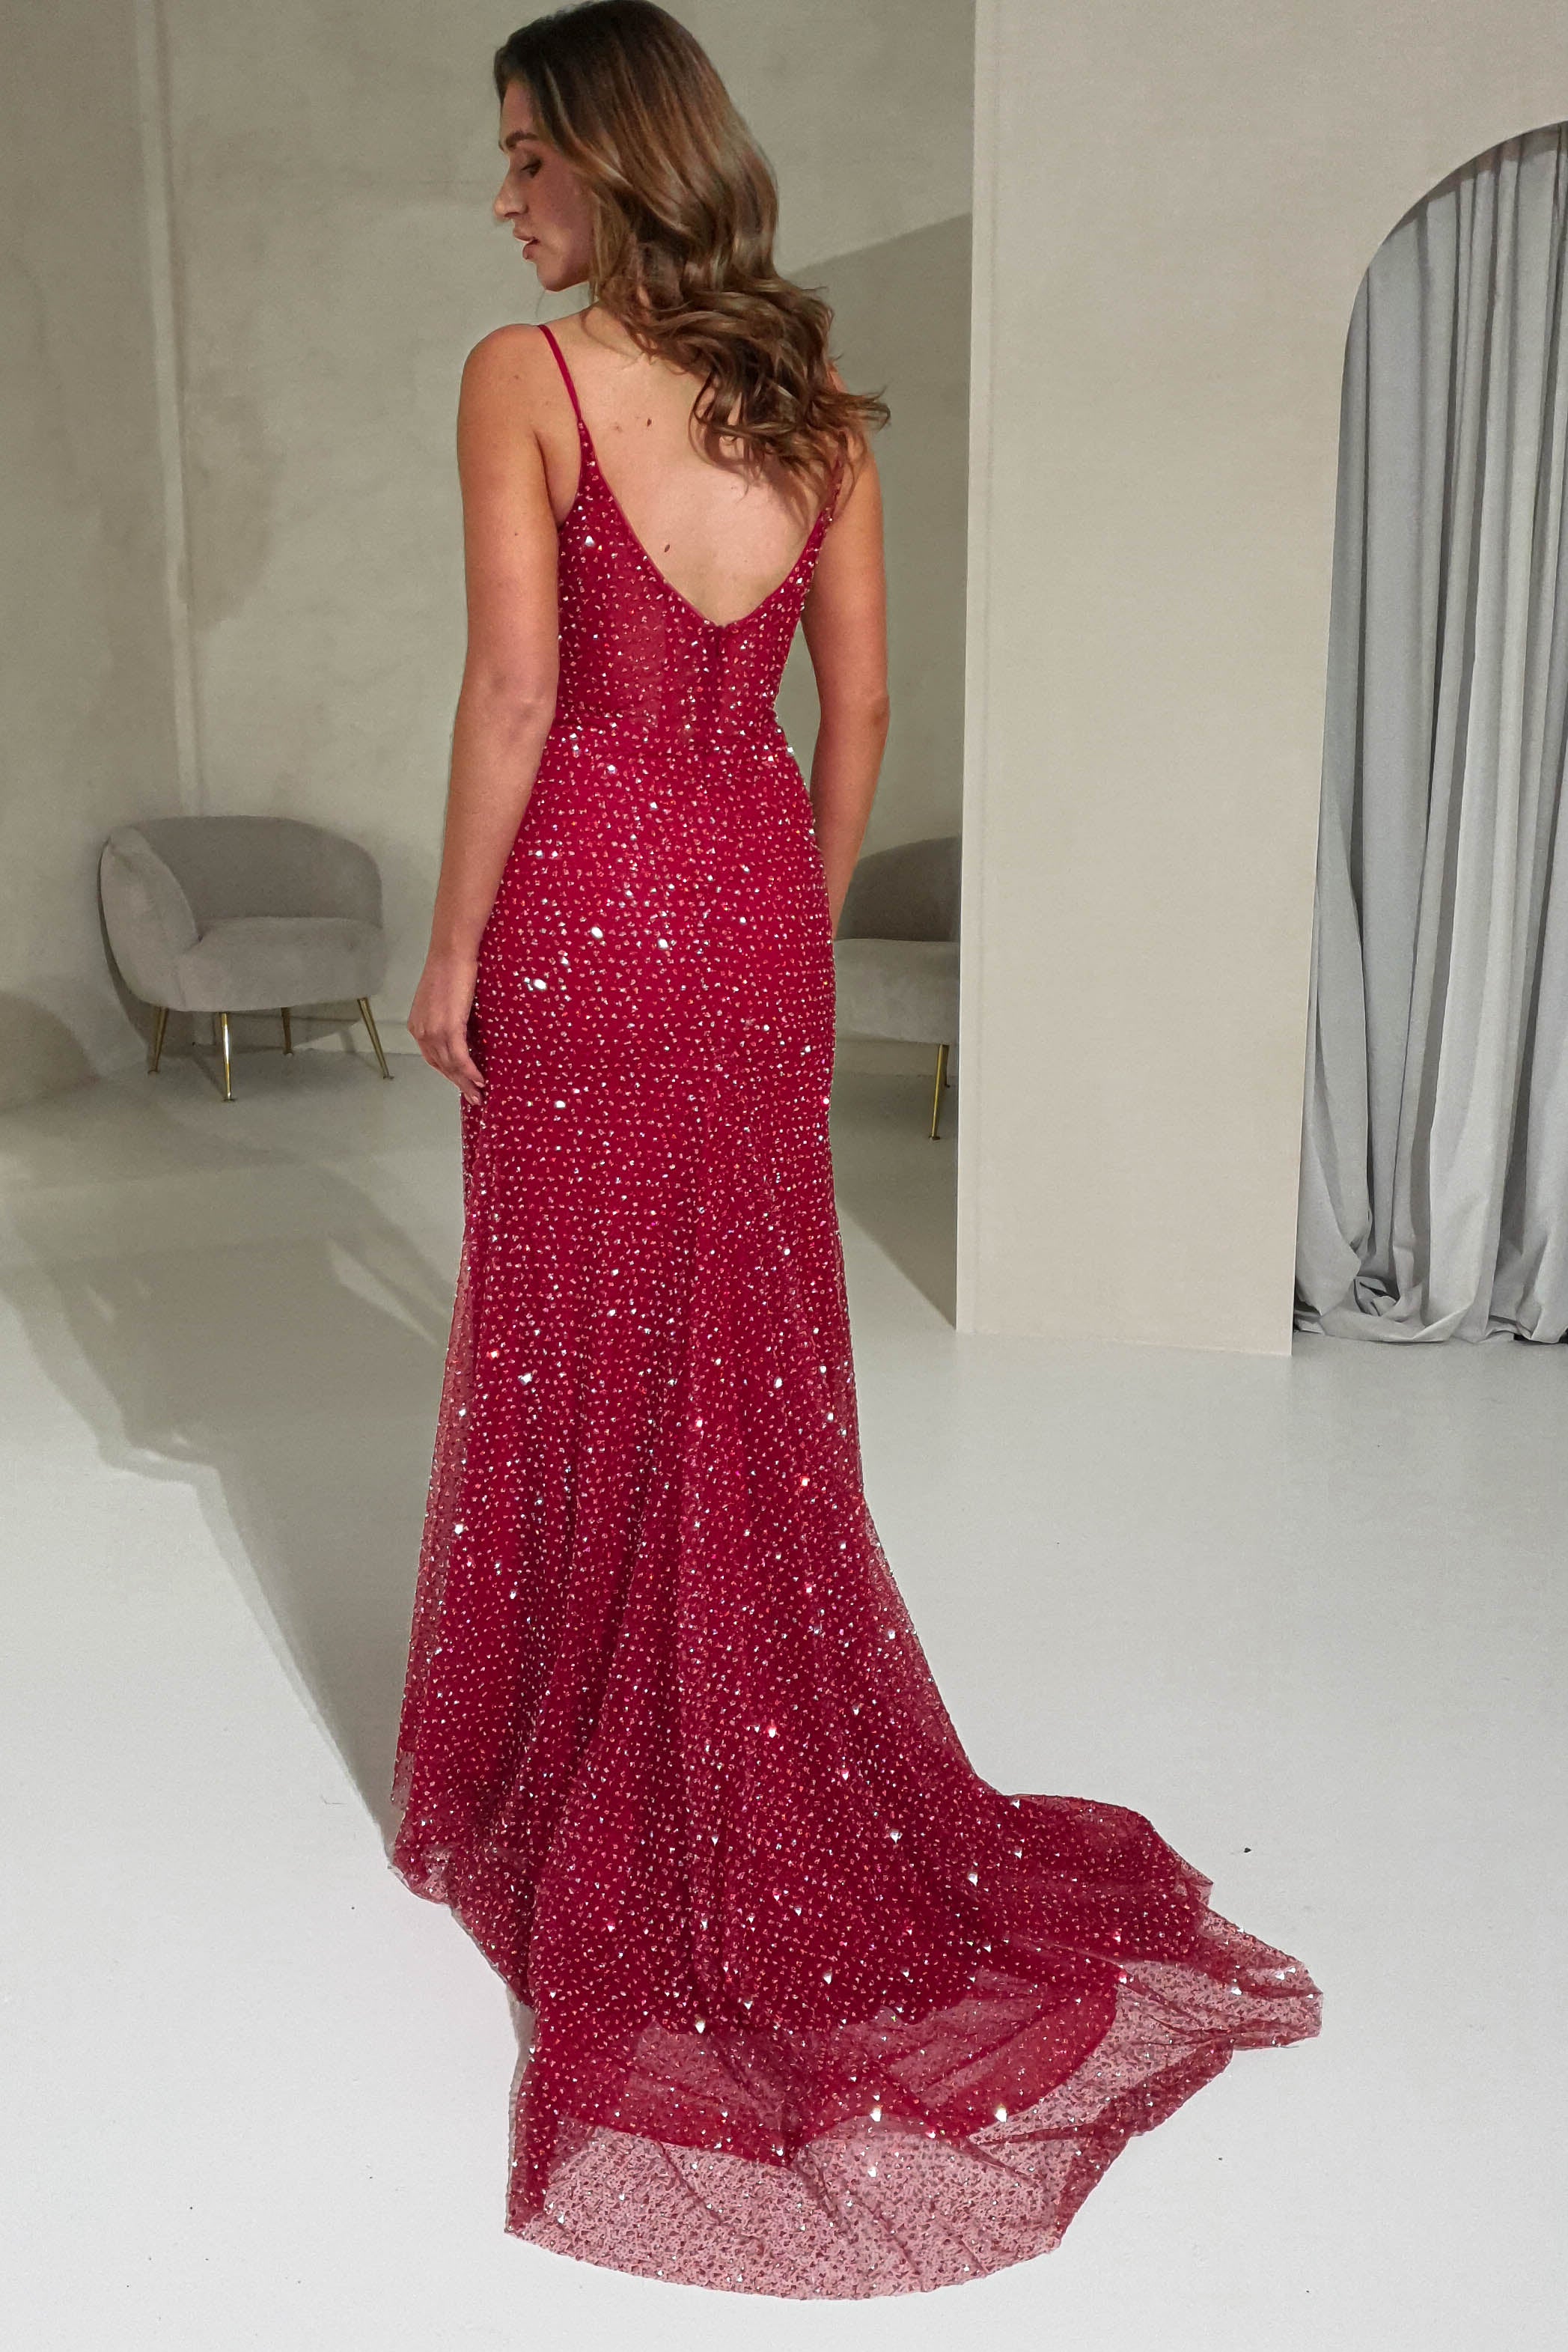 done-cc2167-dark-red-diamante-gown-mermaid-tail-dark-red-cind-dresses-51971269853525.jpg